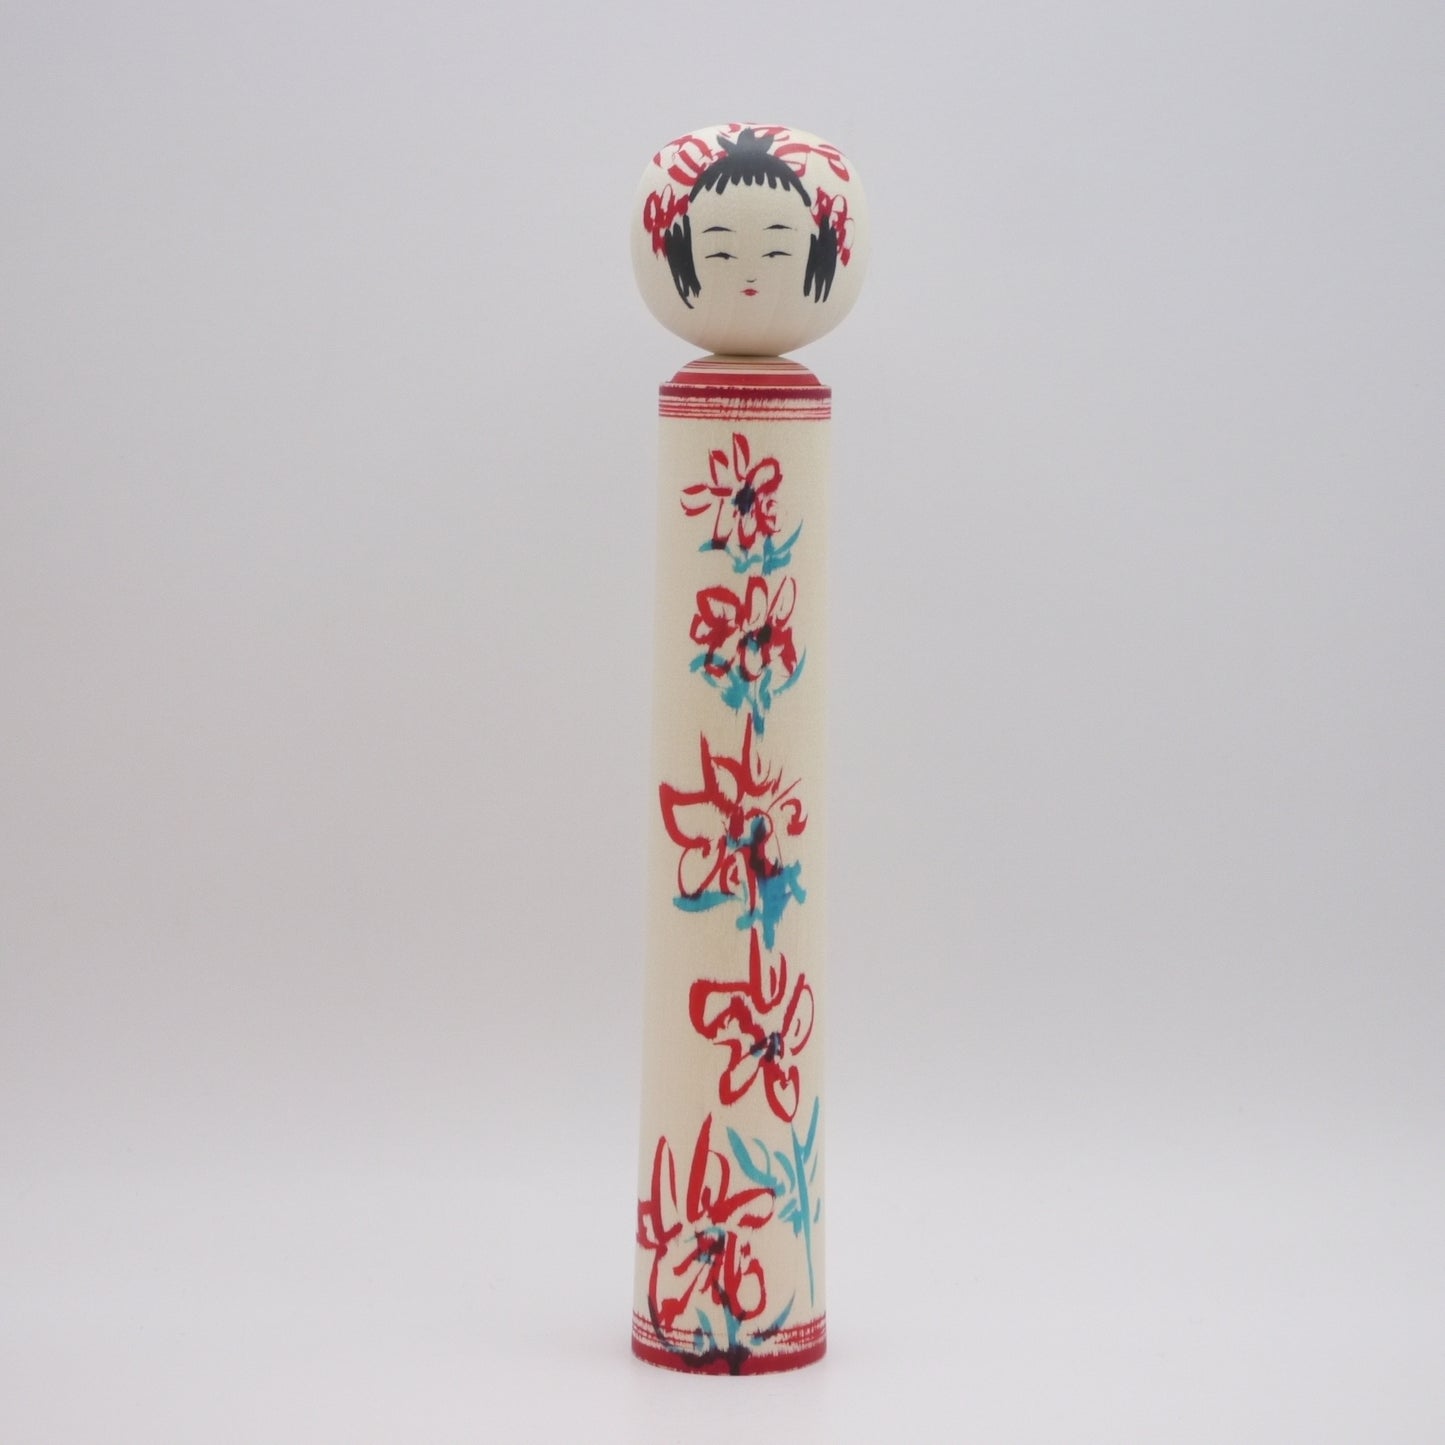 19cm Kokeshi doll by Tomohiro Matsuda